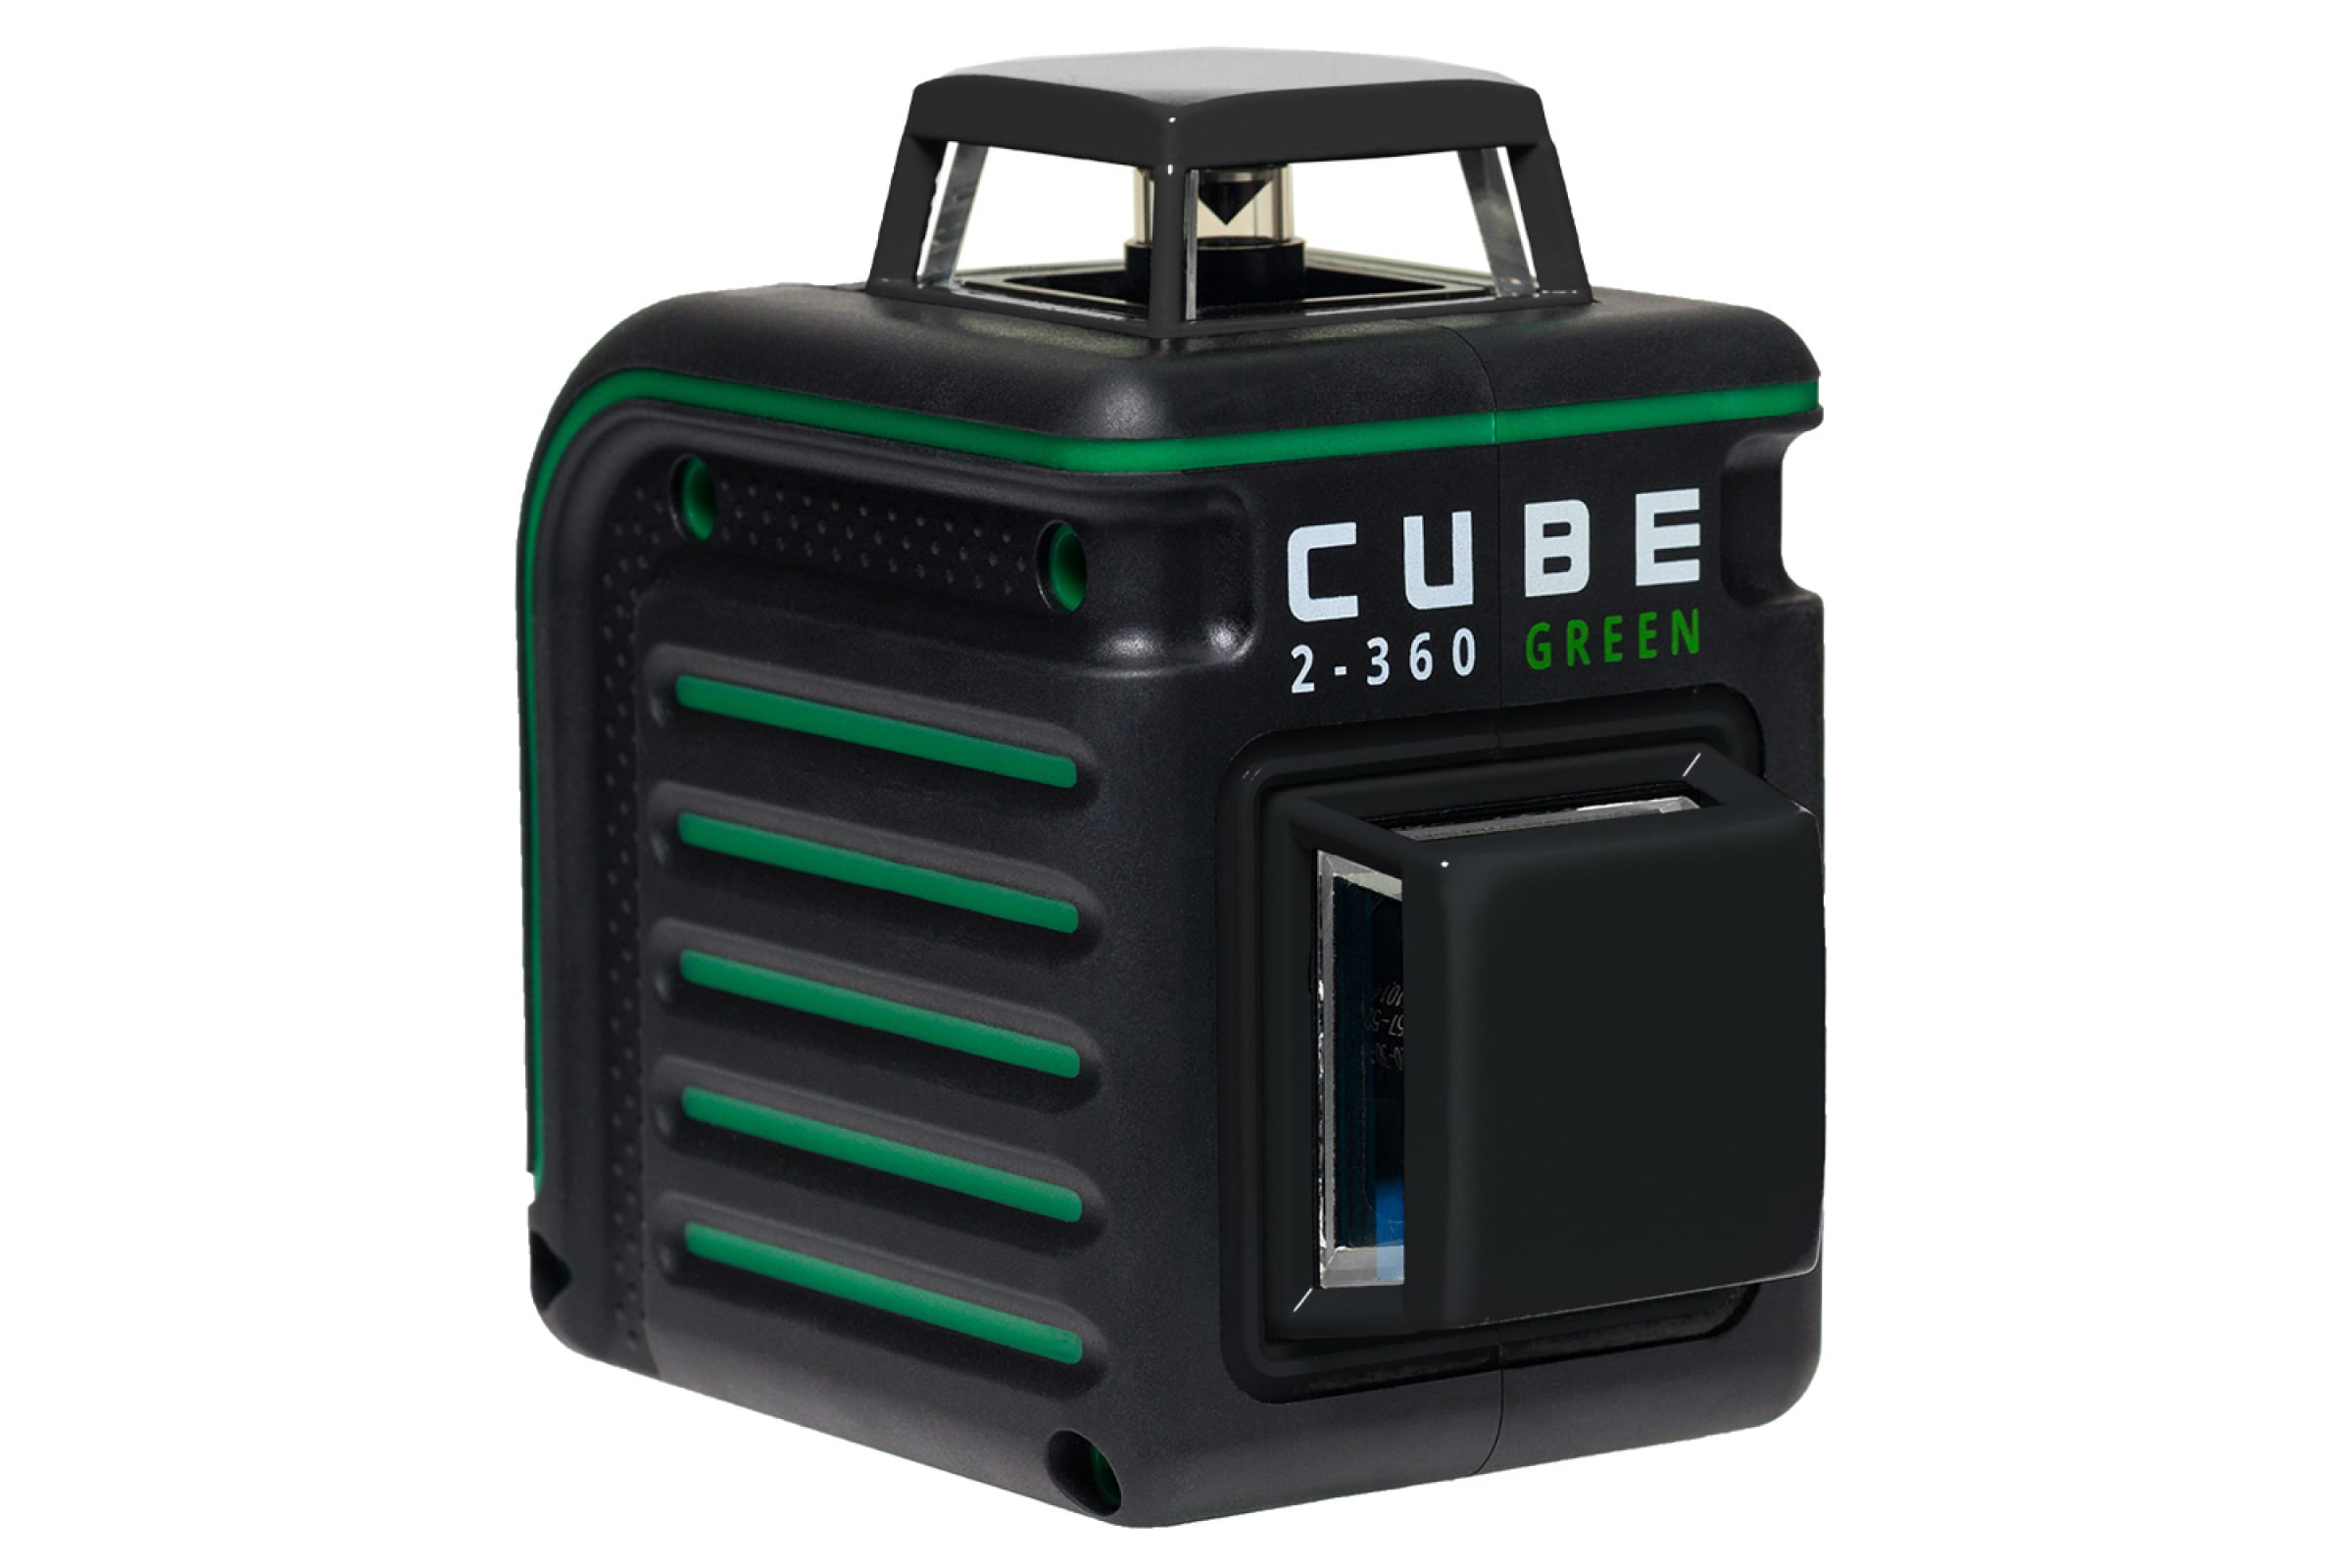 Ada cube 2. Ada Cube 2-360 Green professional Edition а00534. Лазерный нивелир ada Cube 360 2v Green professional Edition. Лазерный уровень ada Cube 3-360 Green Ultimate Edition а00569. Построитель Green 2 360.